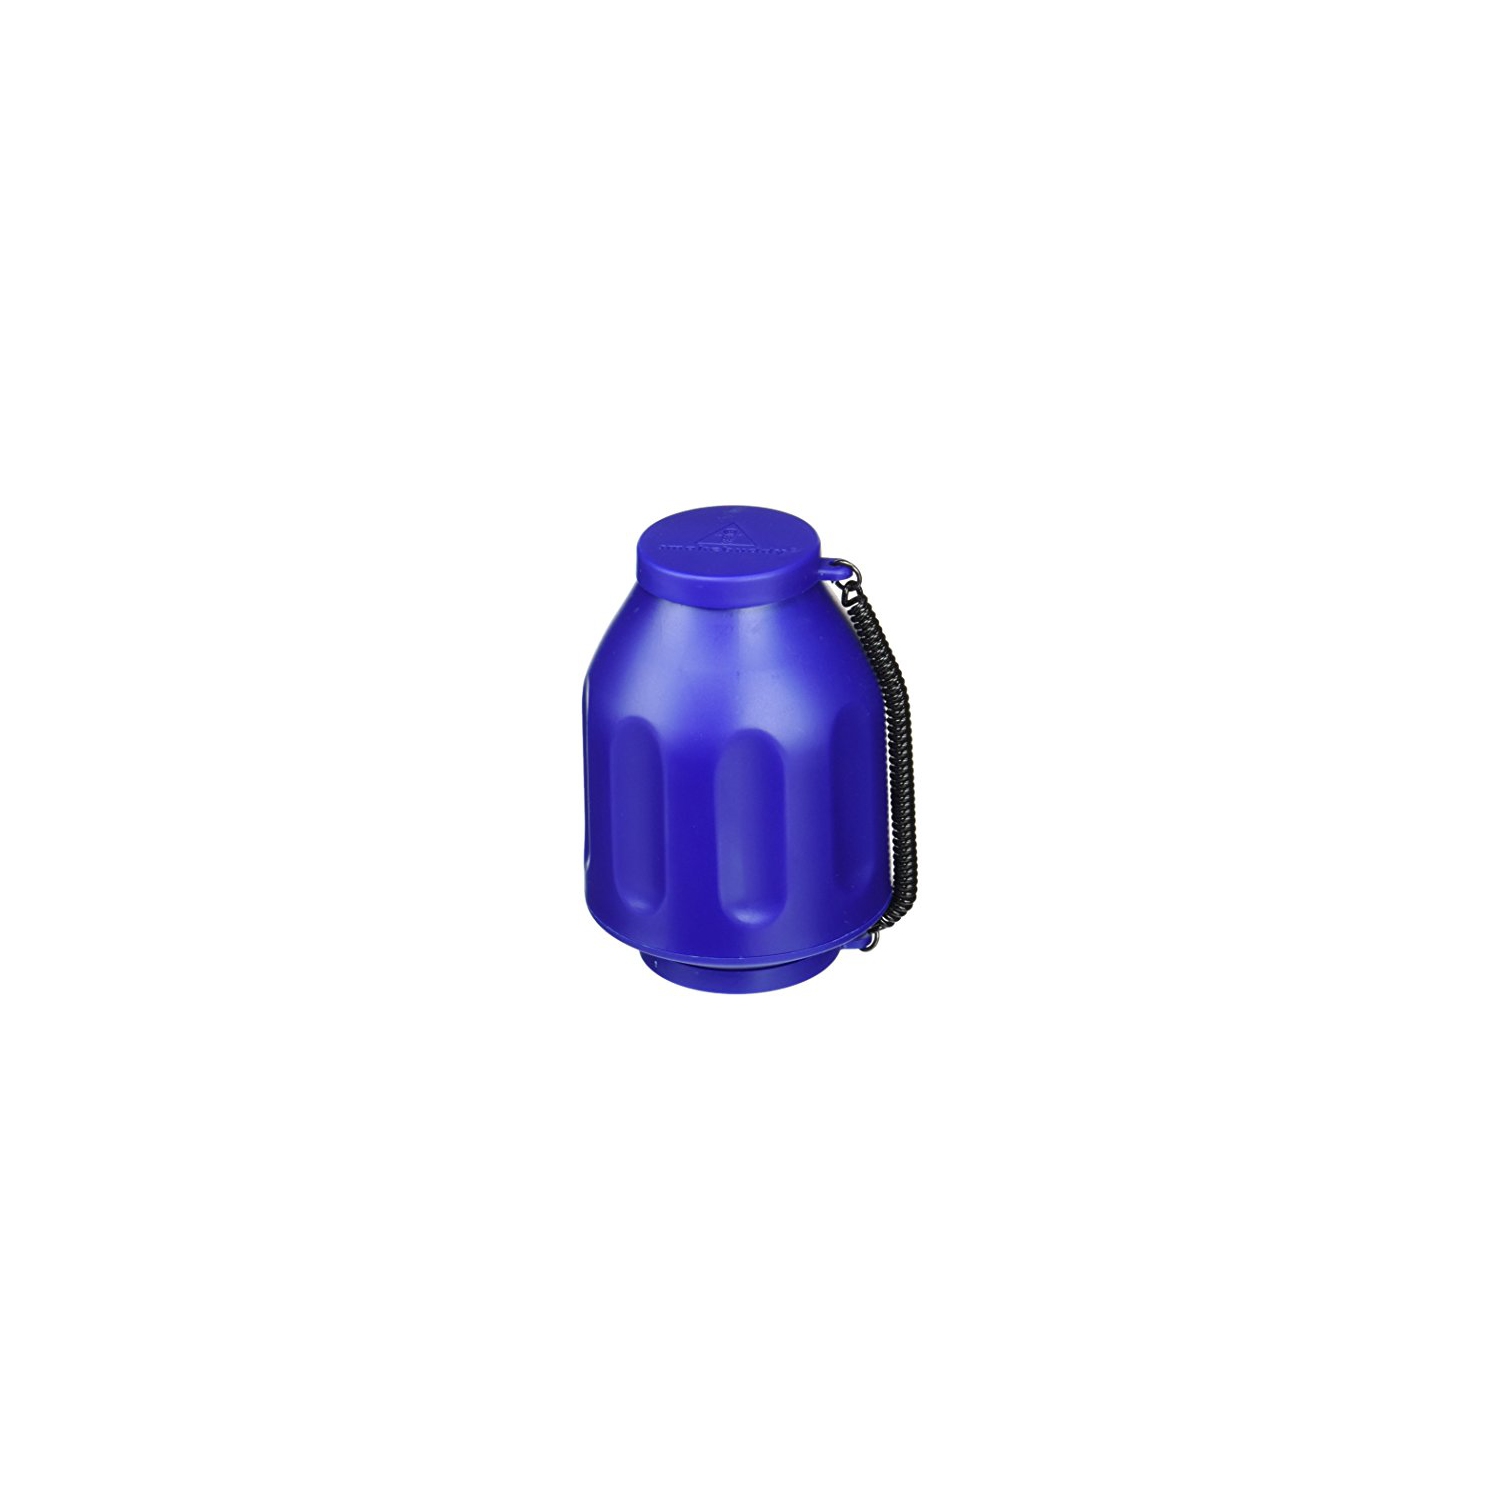 Smoke Buddy 0159-BLU Personal Air Filter, Blue